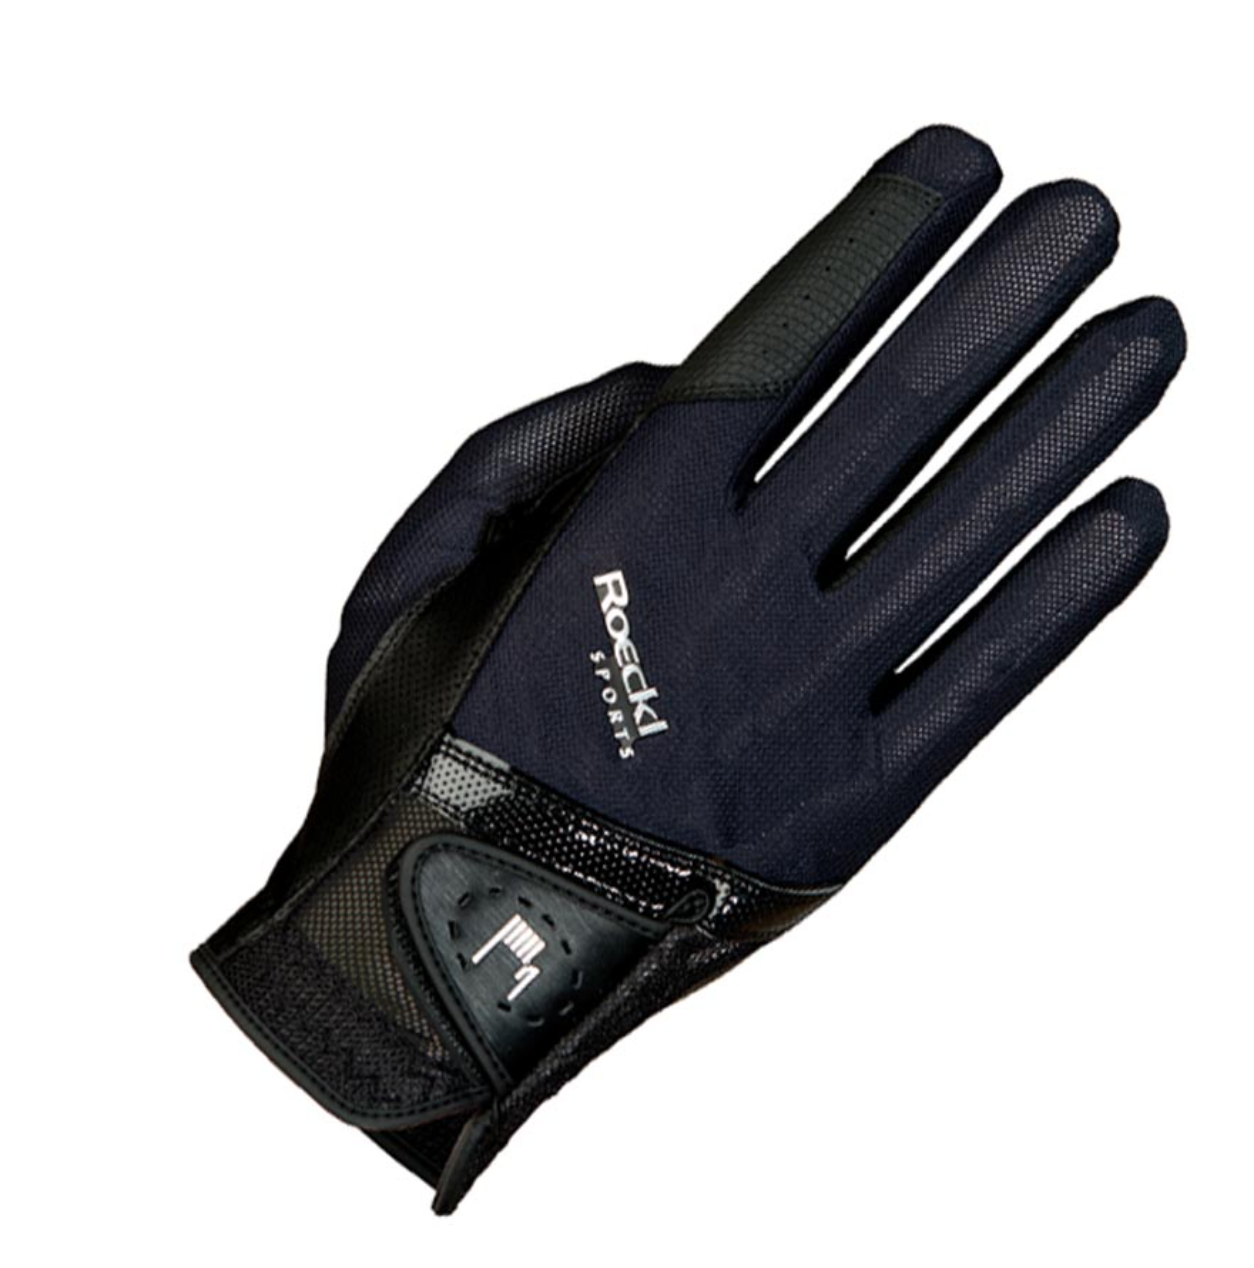 Roeckl Roeck Grip Lite Riding Gloves - Black